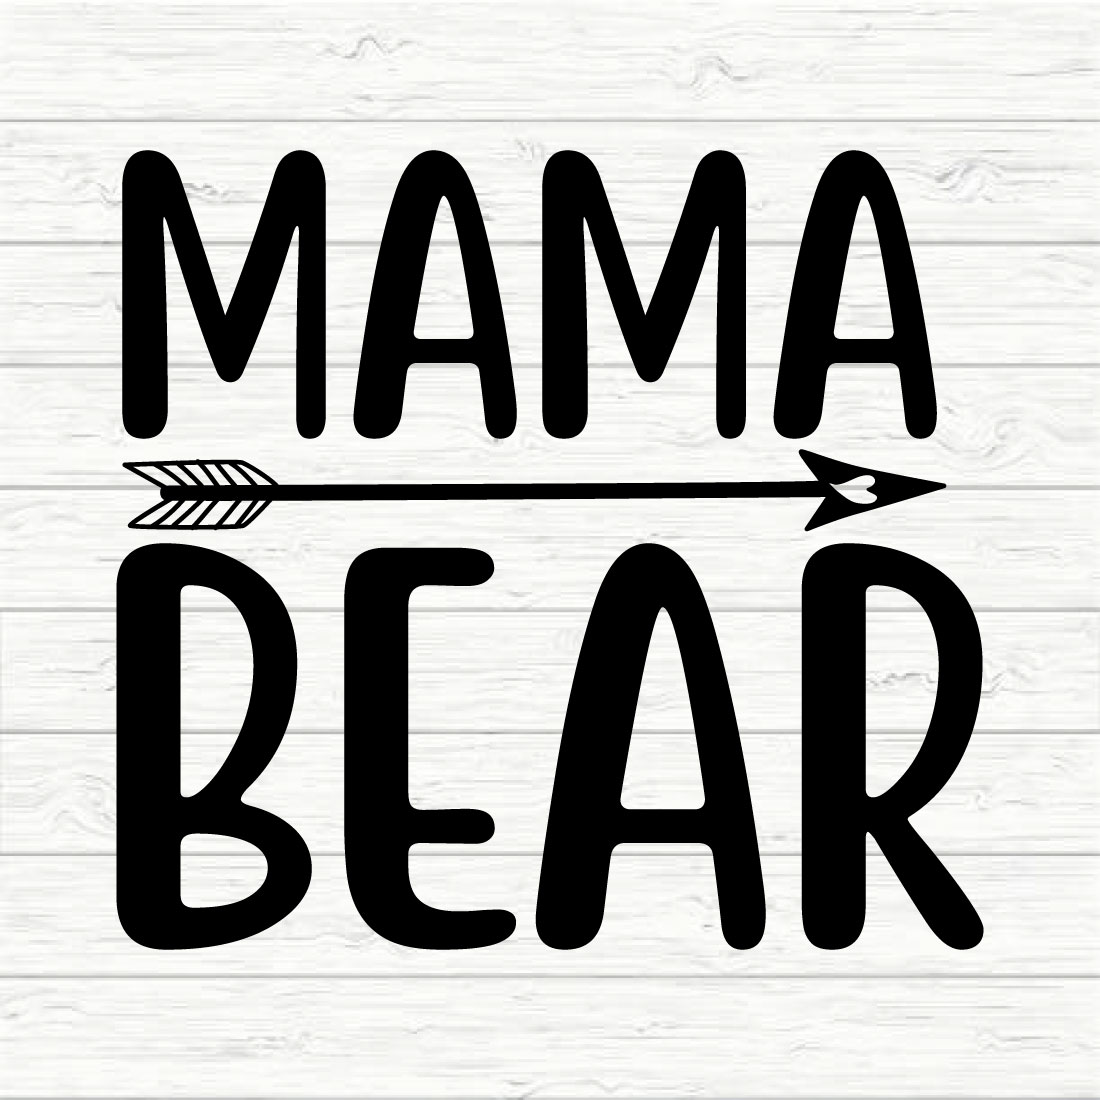 Mama Bear preview image.